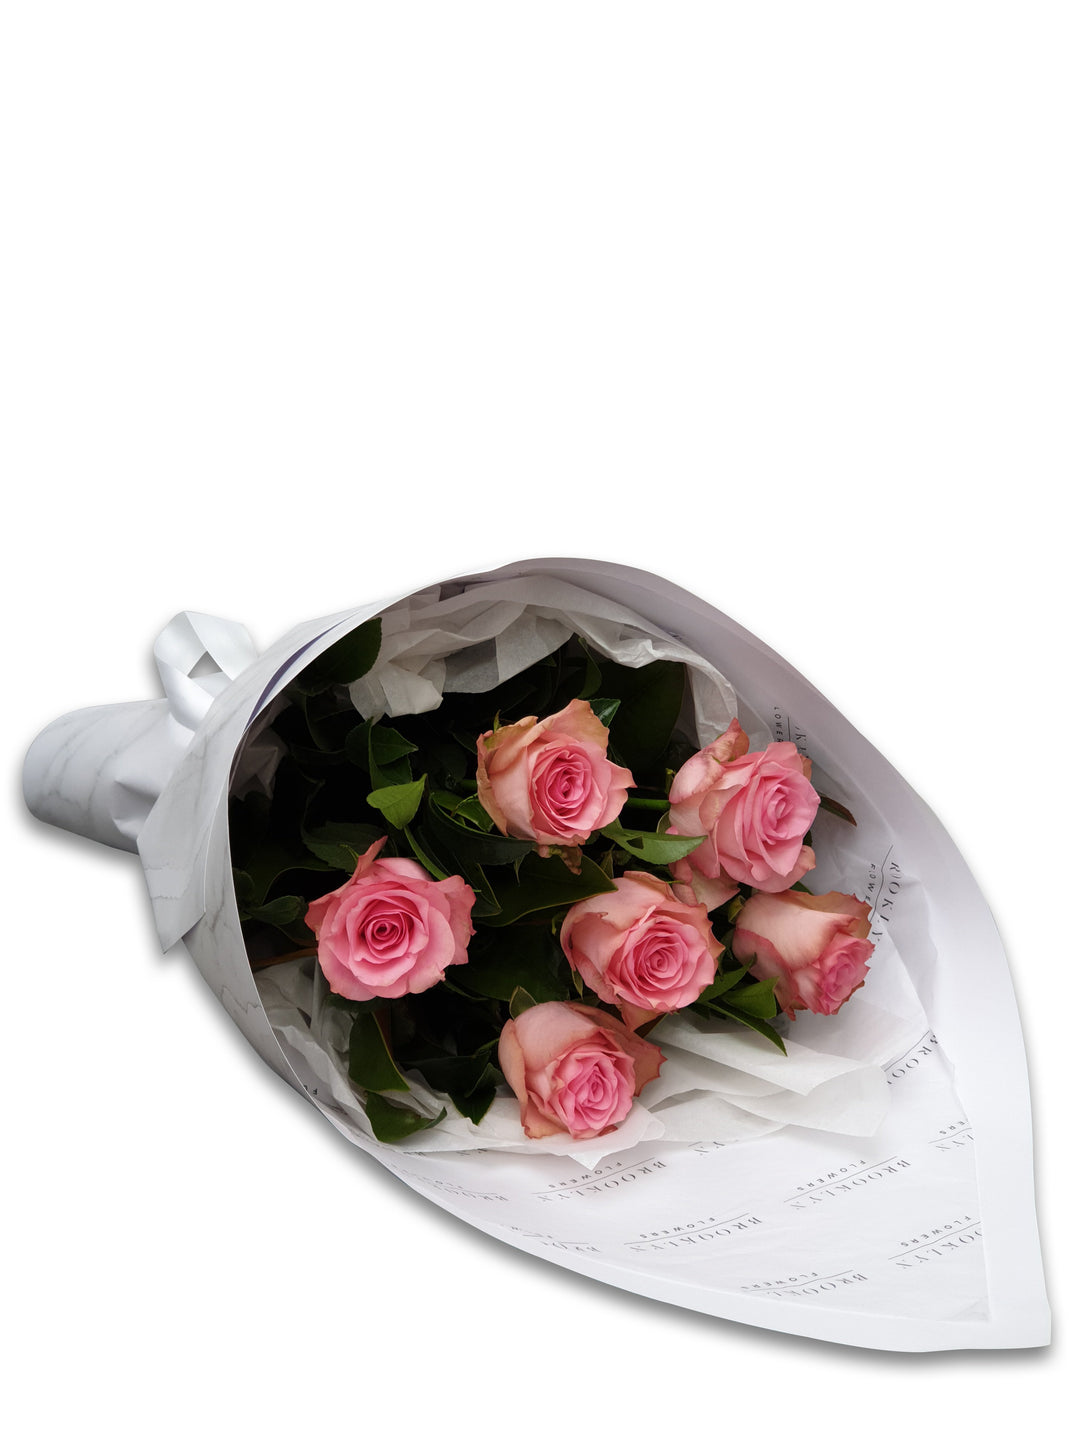 Pink Rose Bouquet - Brooklyn Flowers